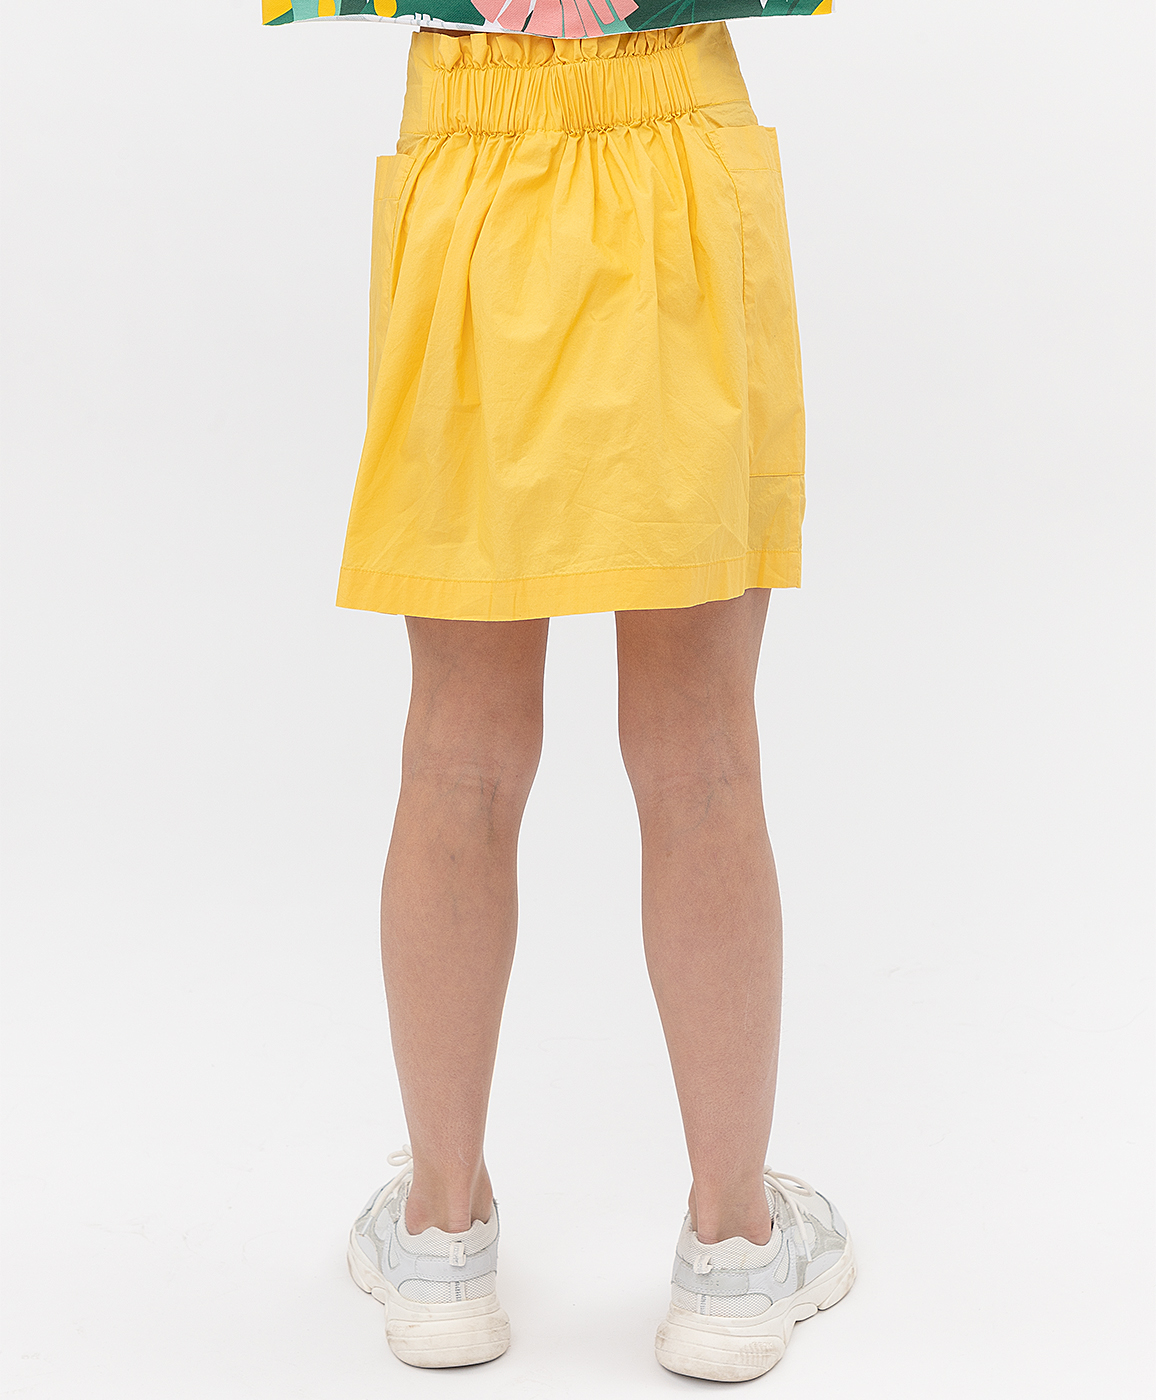 Желтая юбка Button Blue 121BBGJC61032700, размер 134, цвет желтый клеш - фото 3